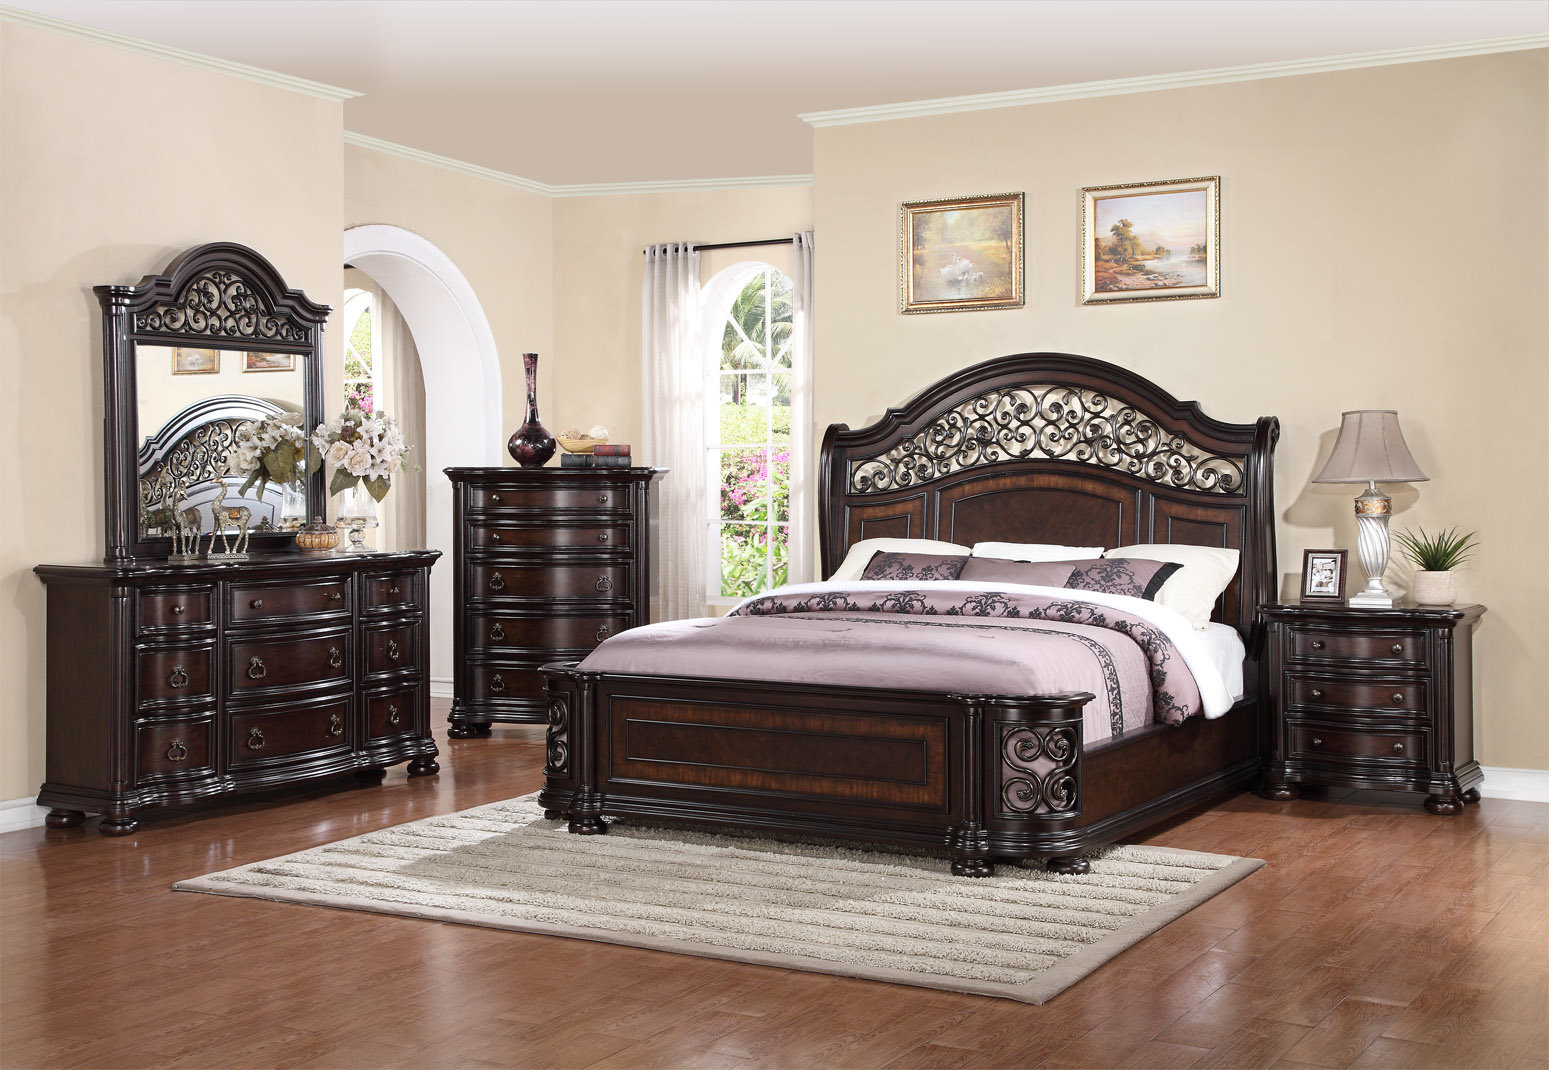 Winkelman King Standard 4 Piece Bedroom Set with regard to dimensions 1549 X 1070